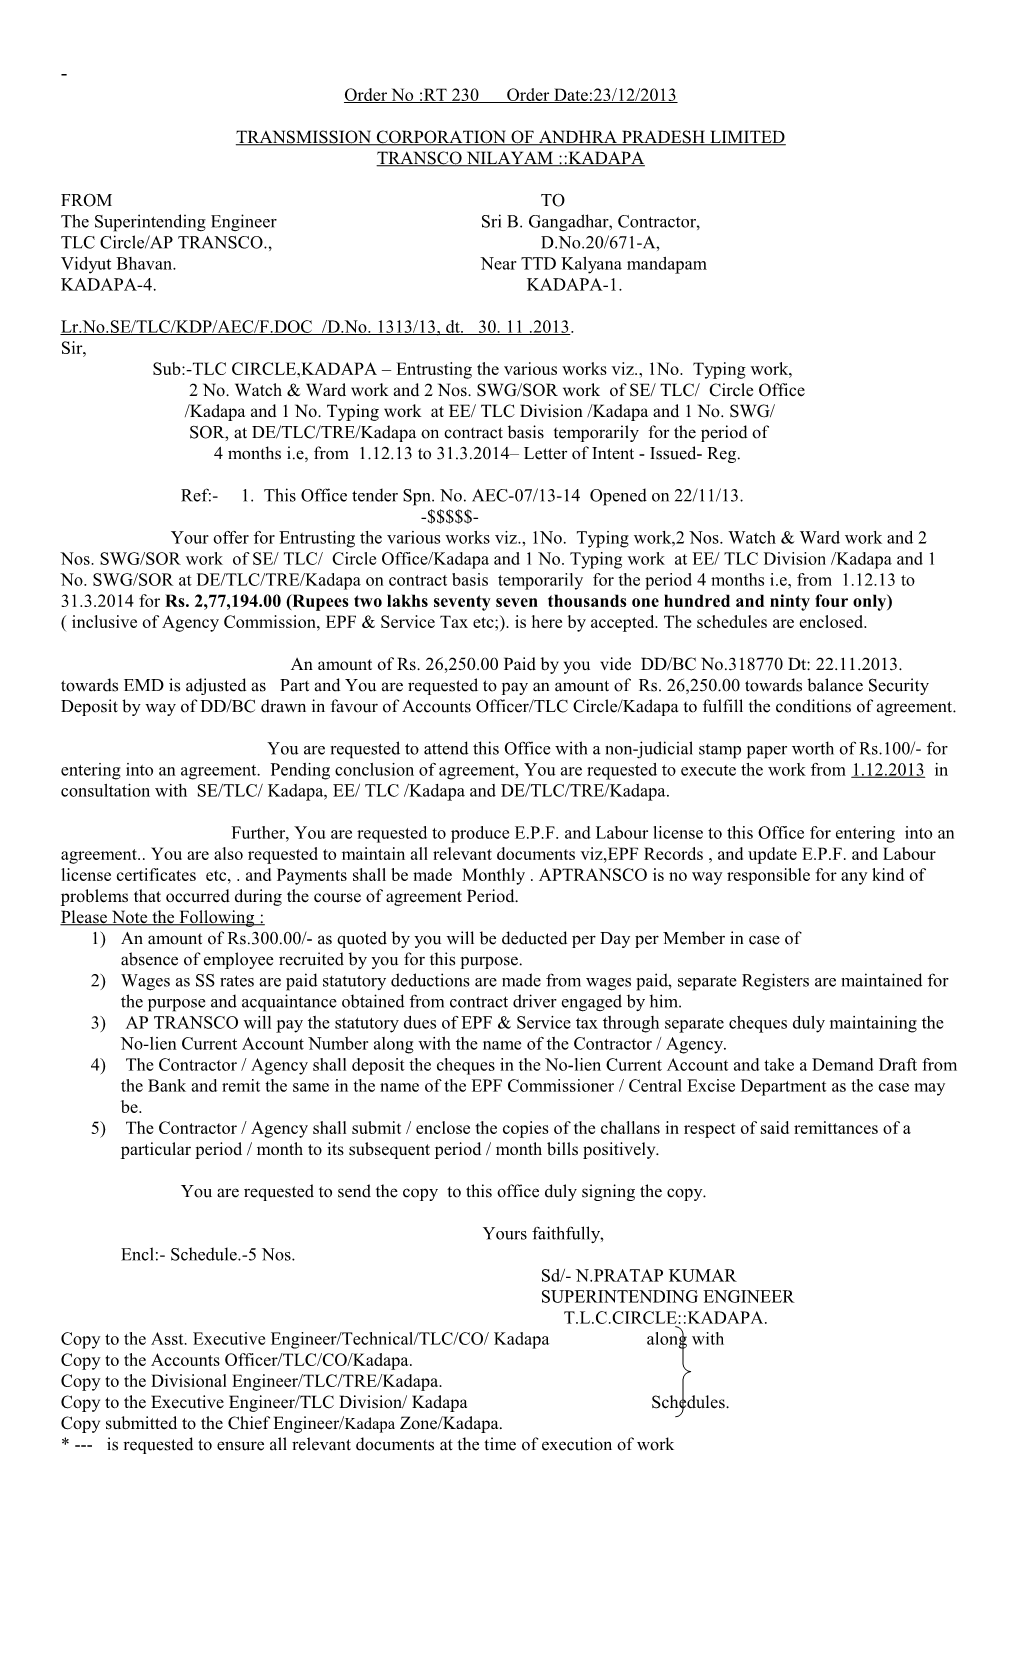 Transmission Corporation of Andhra Pradesh Limited s1